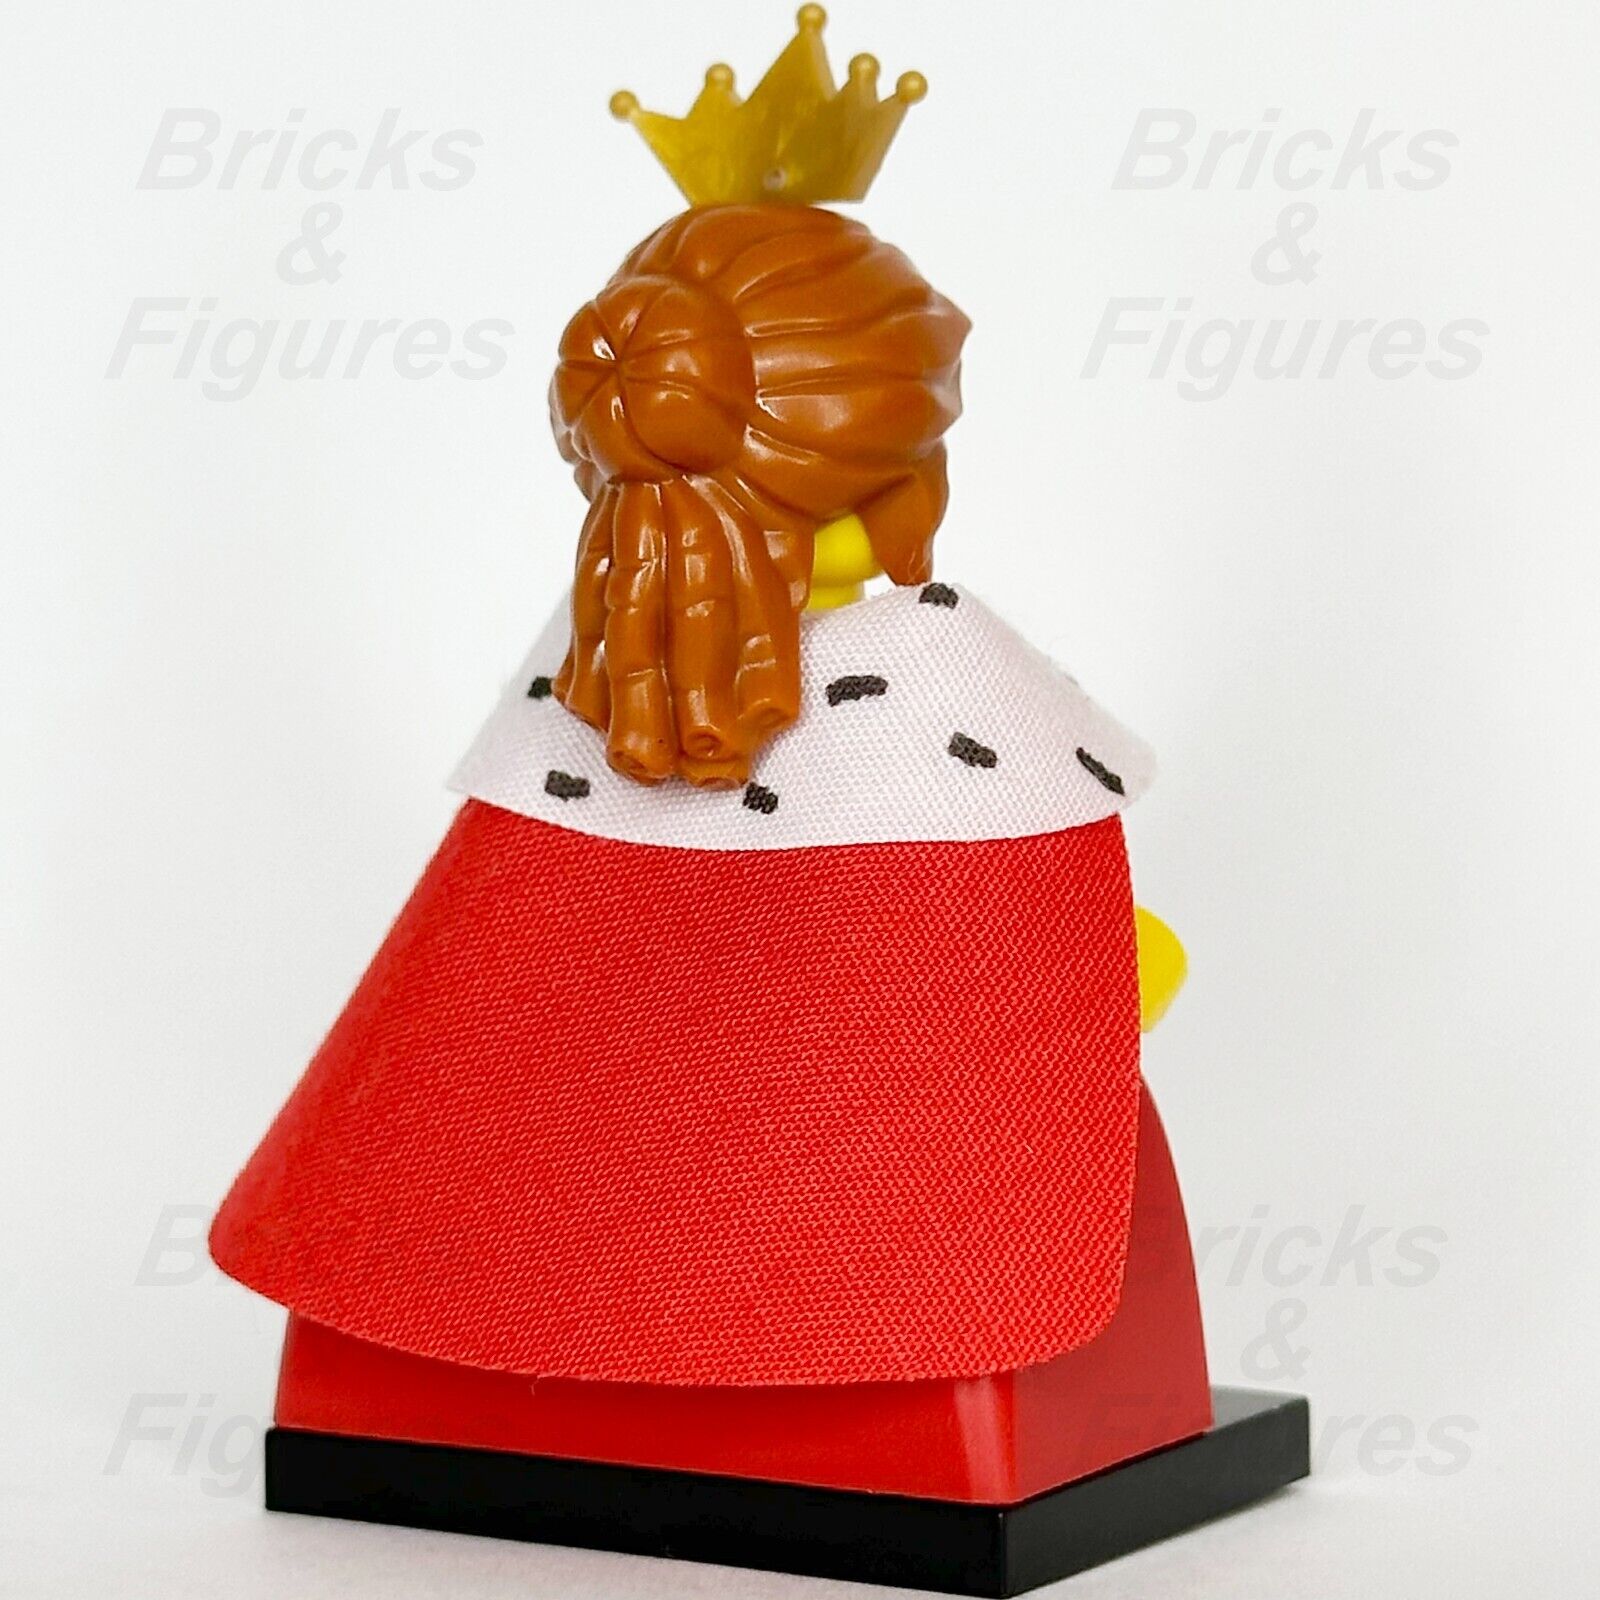 LEGO Collectible Minifigures Queen Minifigure Series 15 Castle 71011 col15-16 - Bricks & Figures